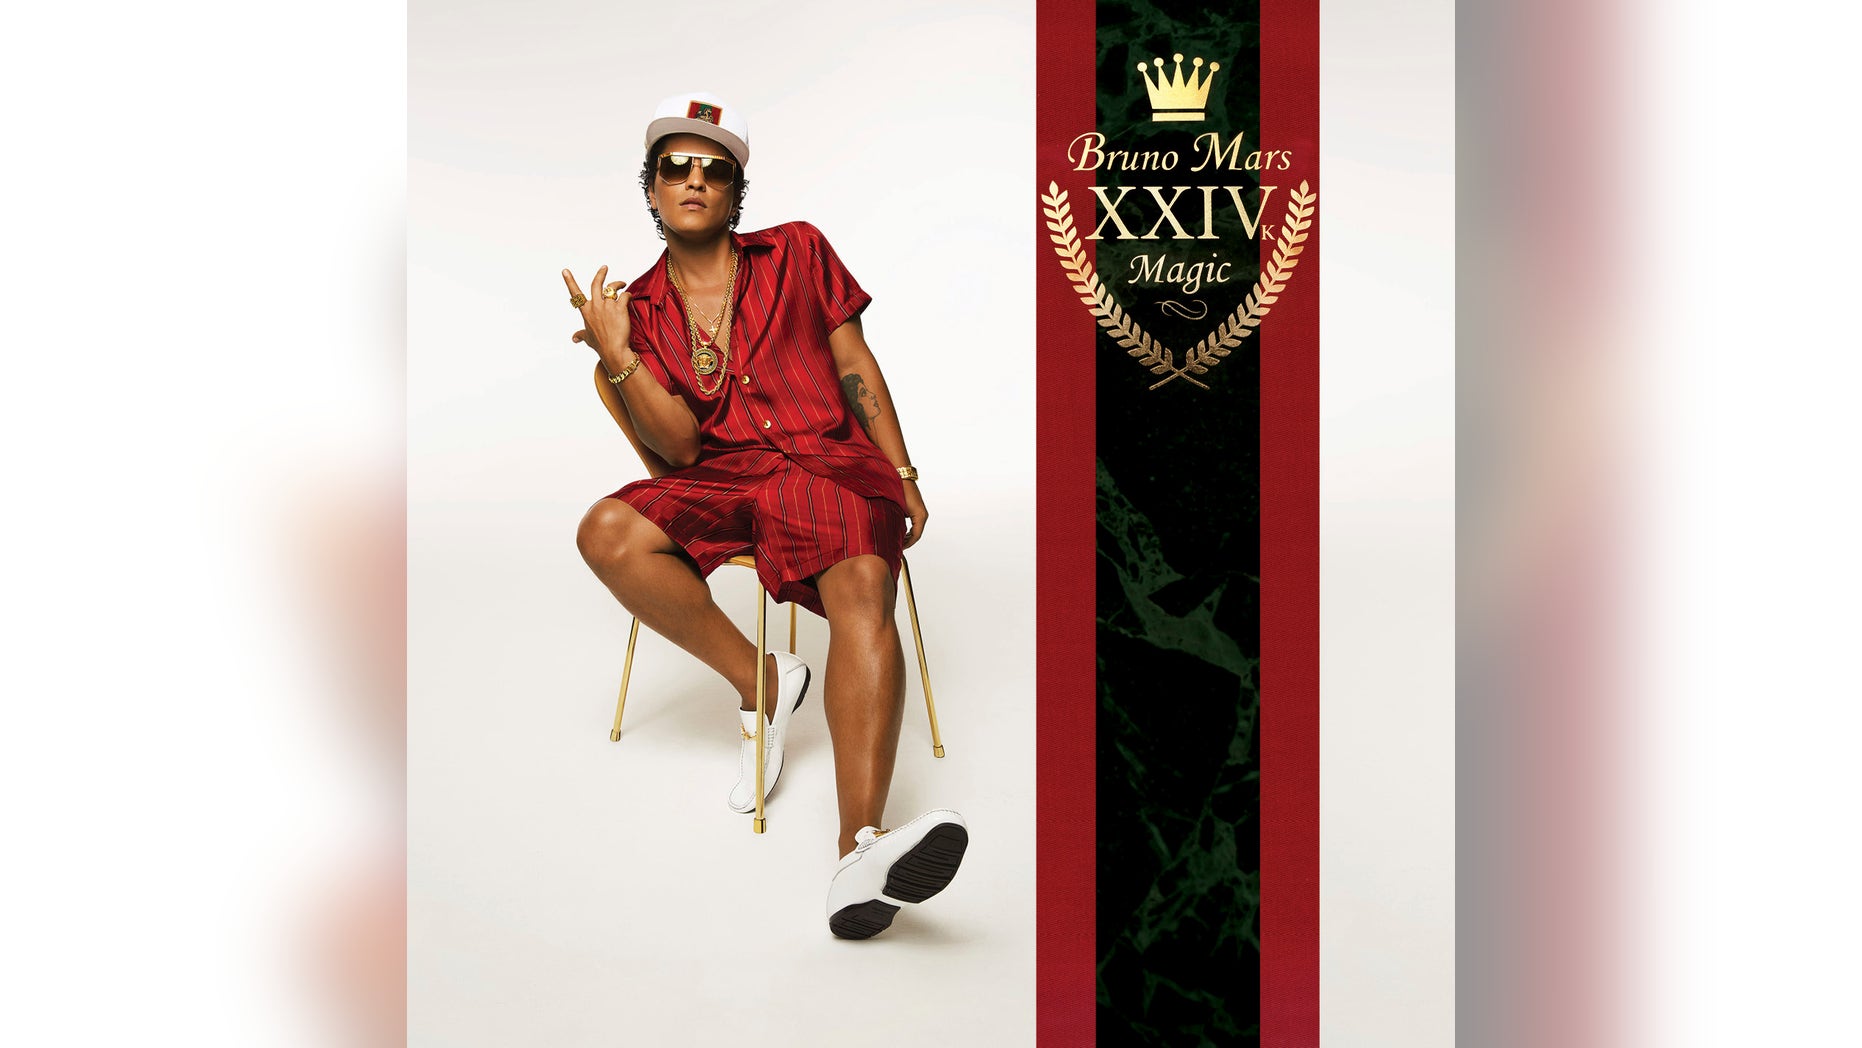 Bruno Mars' swag and style match new album '24K Magic' Fox News